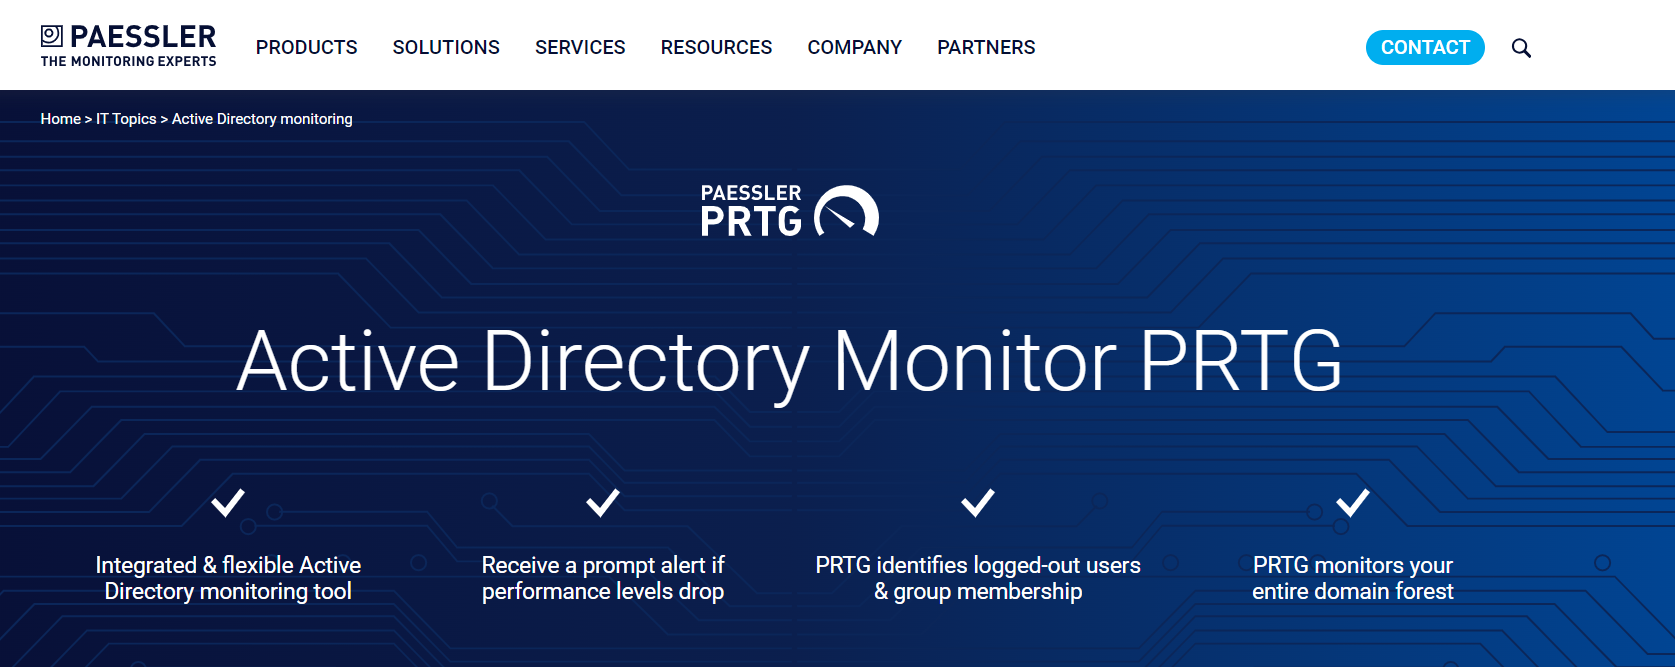 PRTG Active Directory Monitor